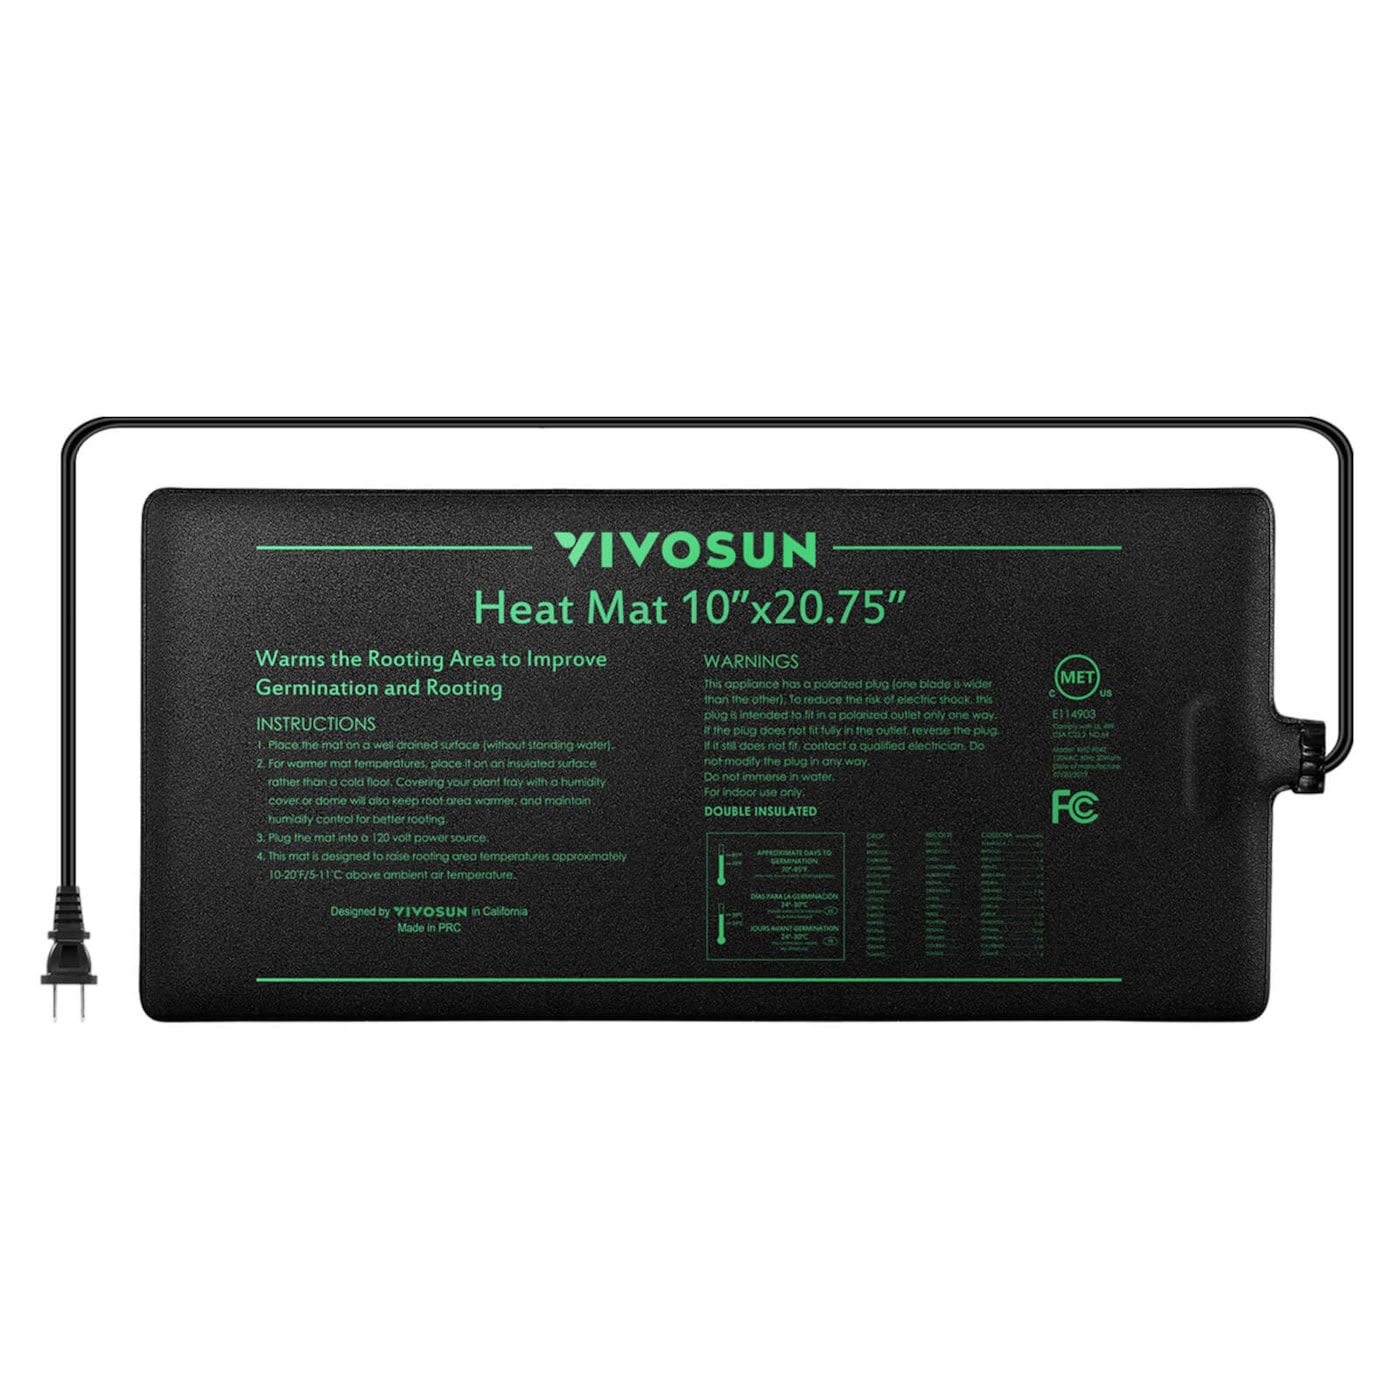 VIVOSUN Durable Waterproof Seedling Heat Mat Warm Hydroponic Heating Pad 10" x 20.75" MET Standard